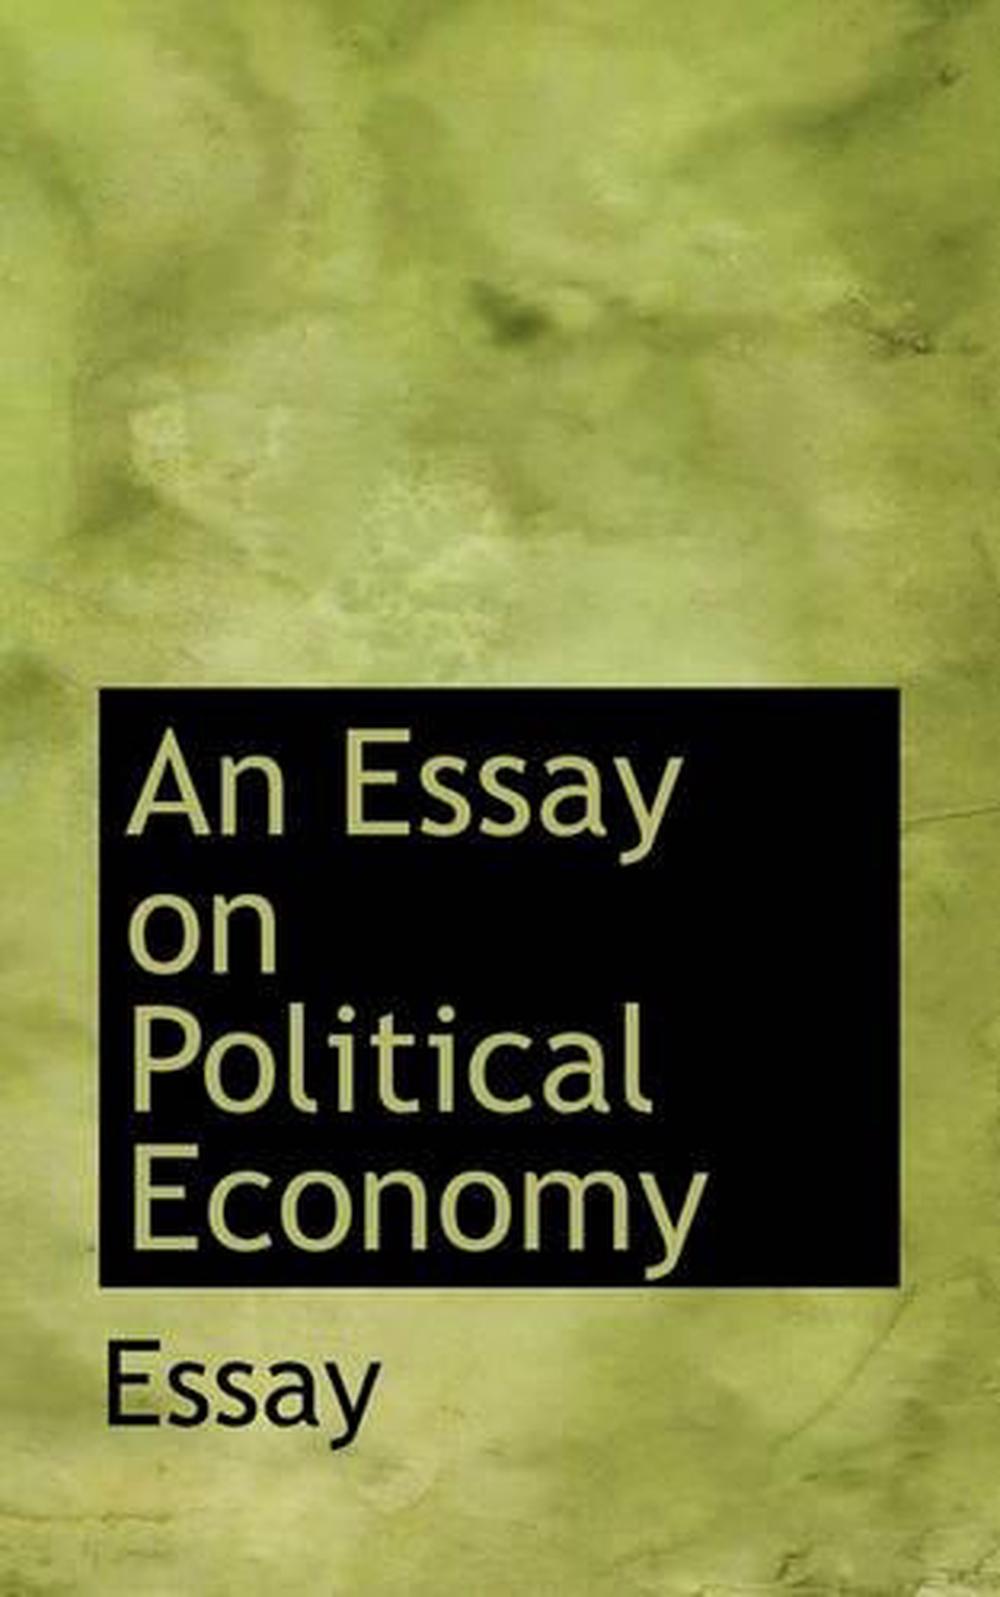 political economy essay